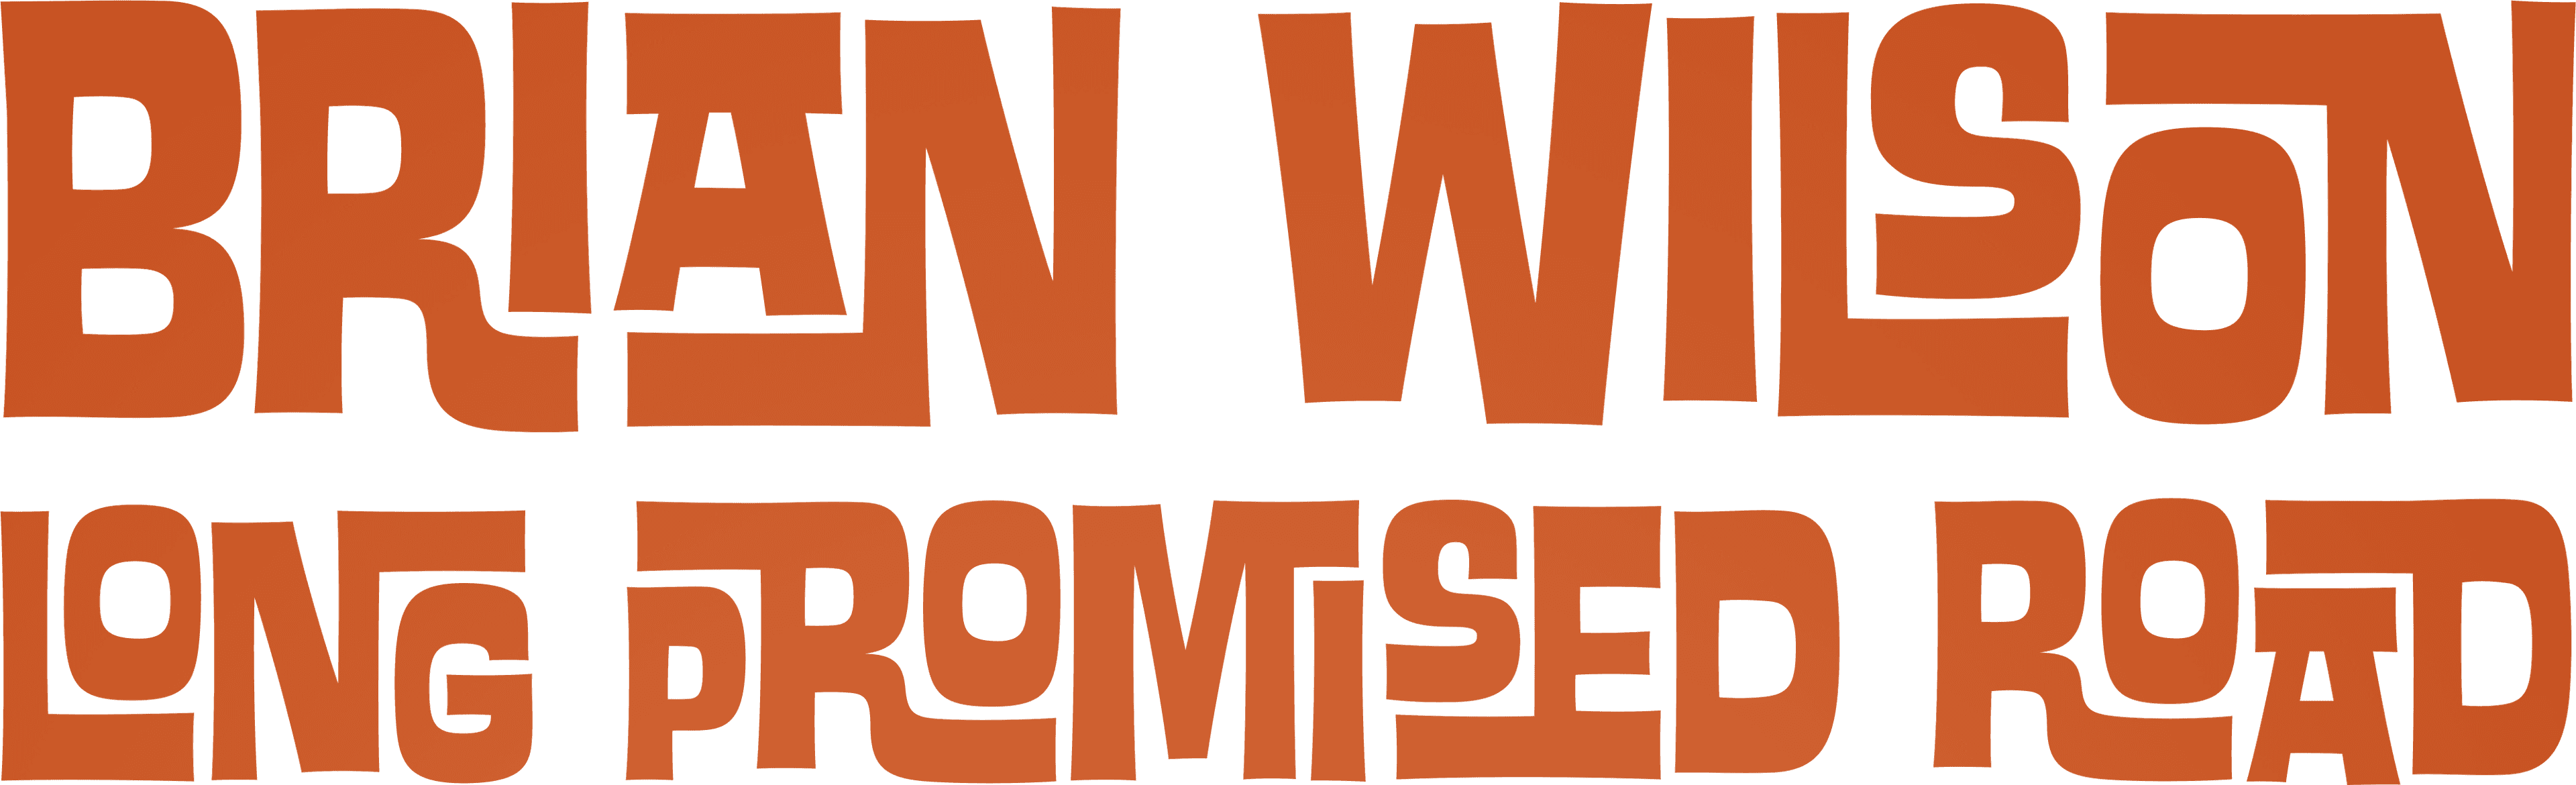 Brian Wilson: Long Promised Road logo